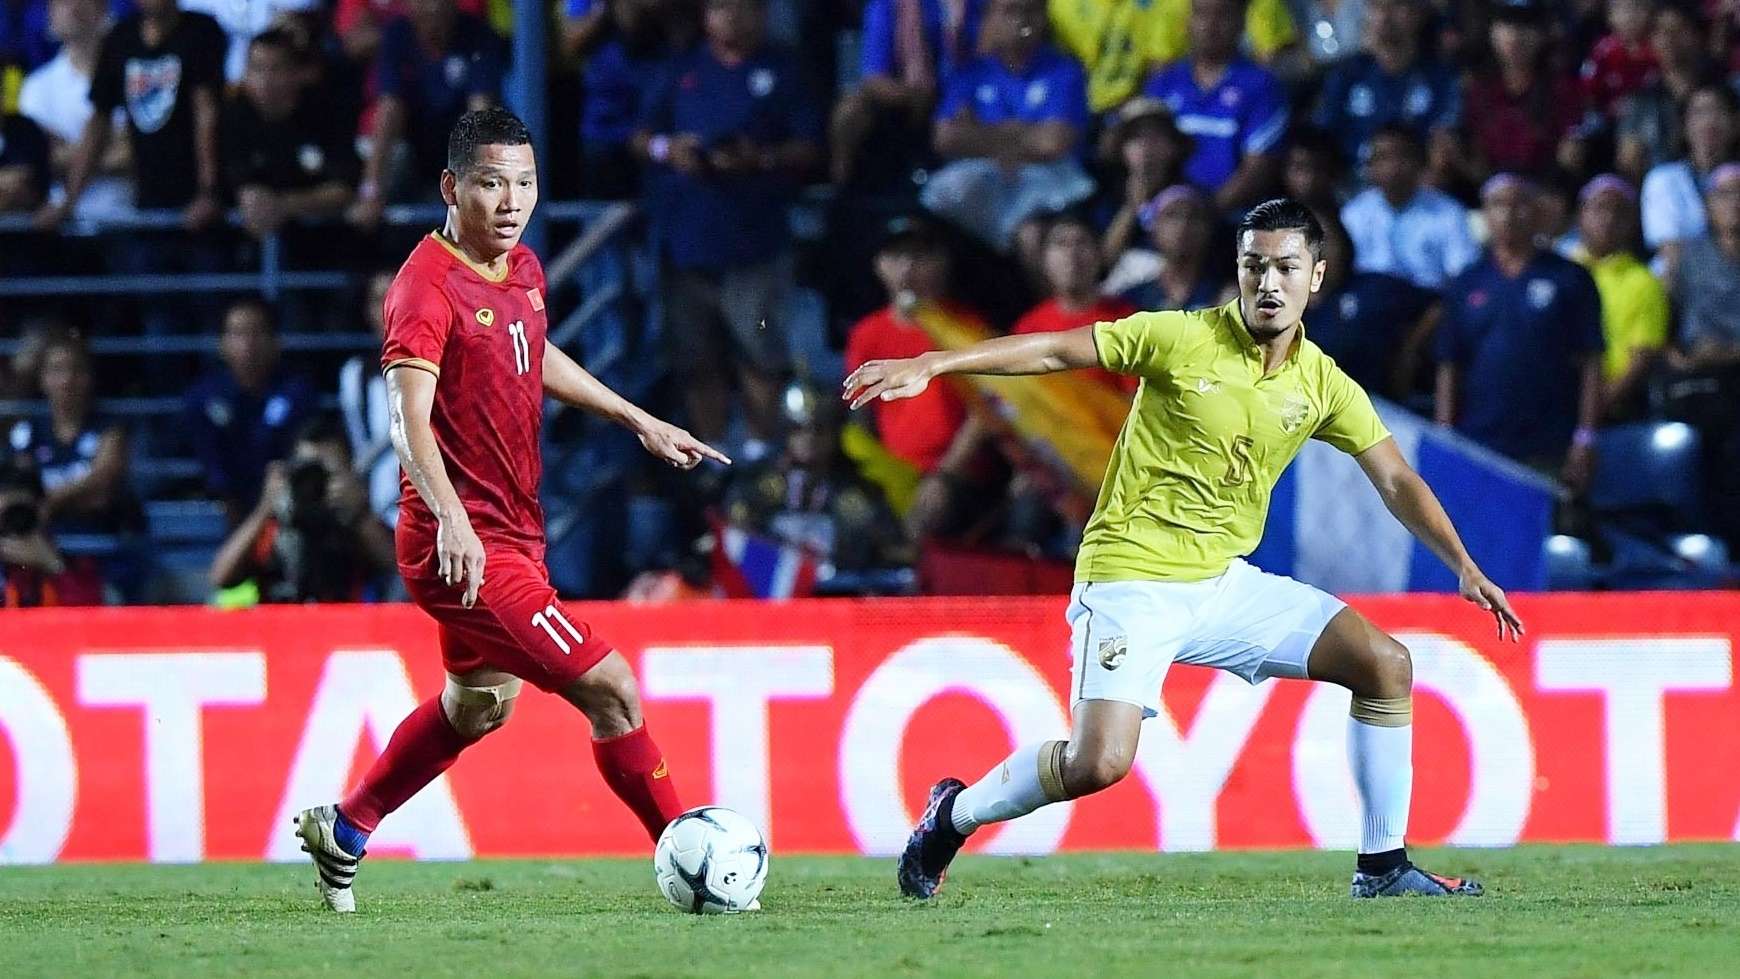 Nguyen Anh Duc vs Adisorn Promrak Vietnam vs Thailand King's Cup 2019